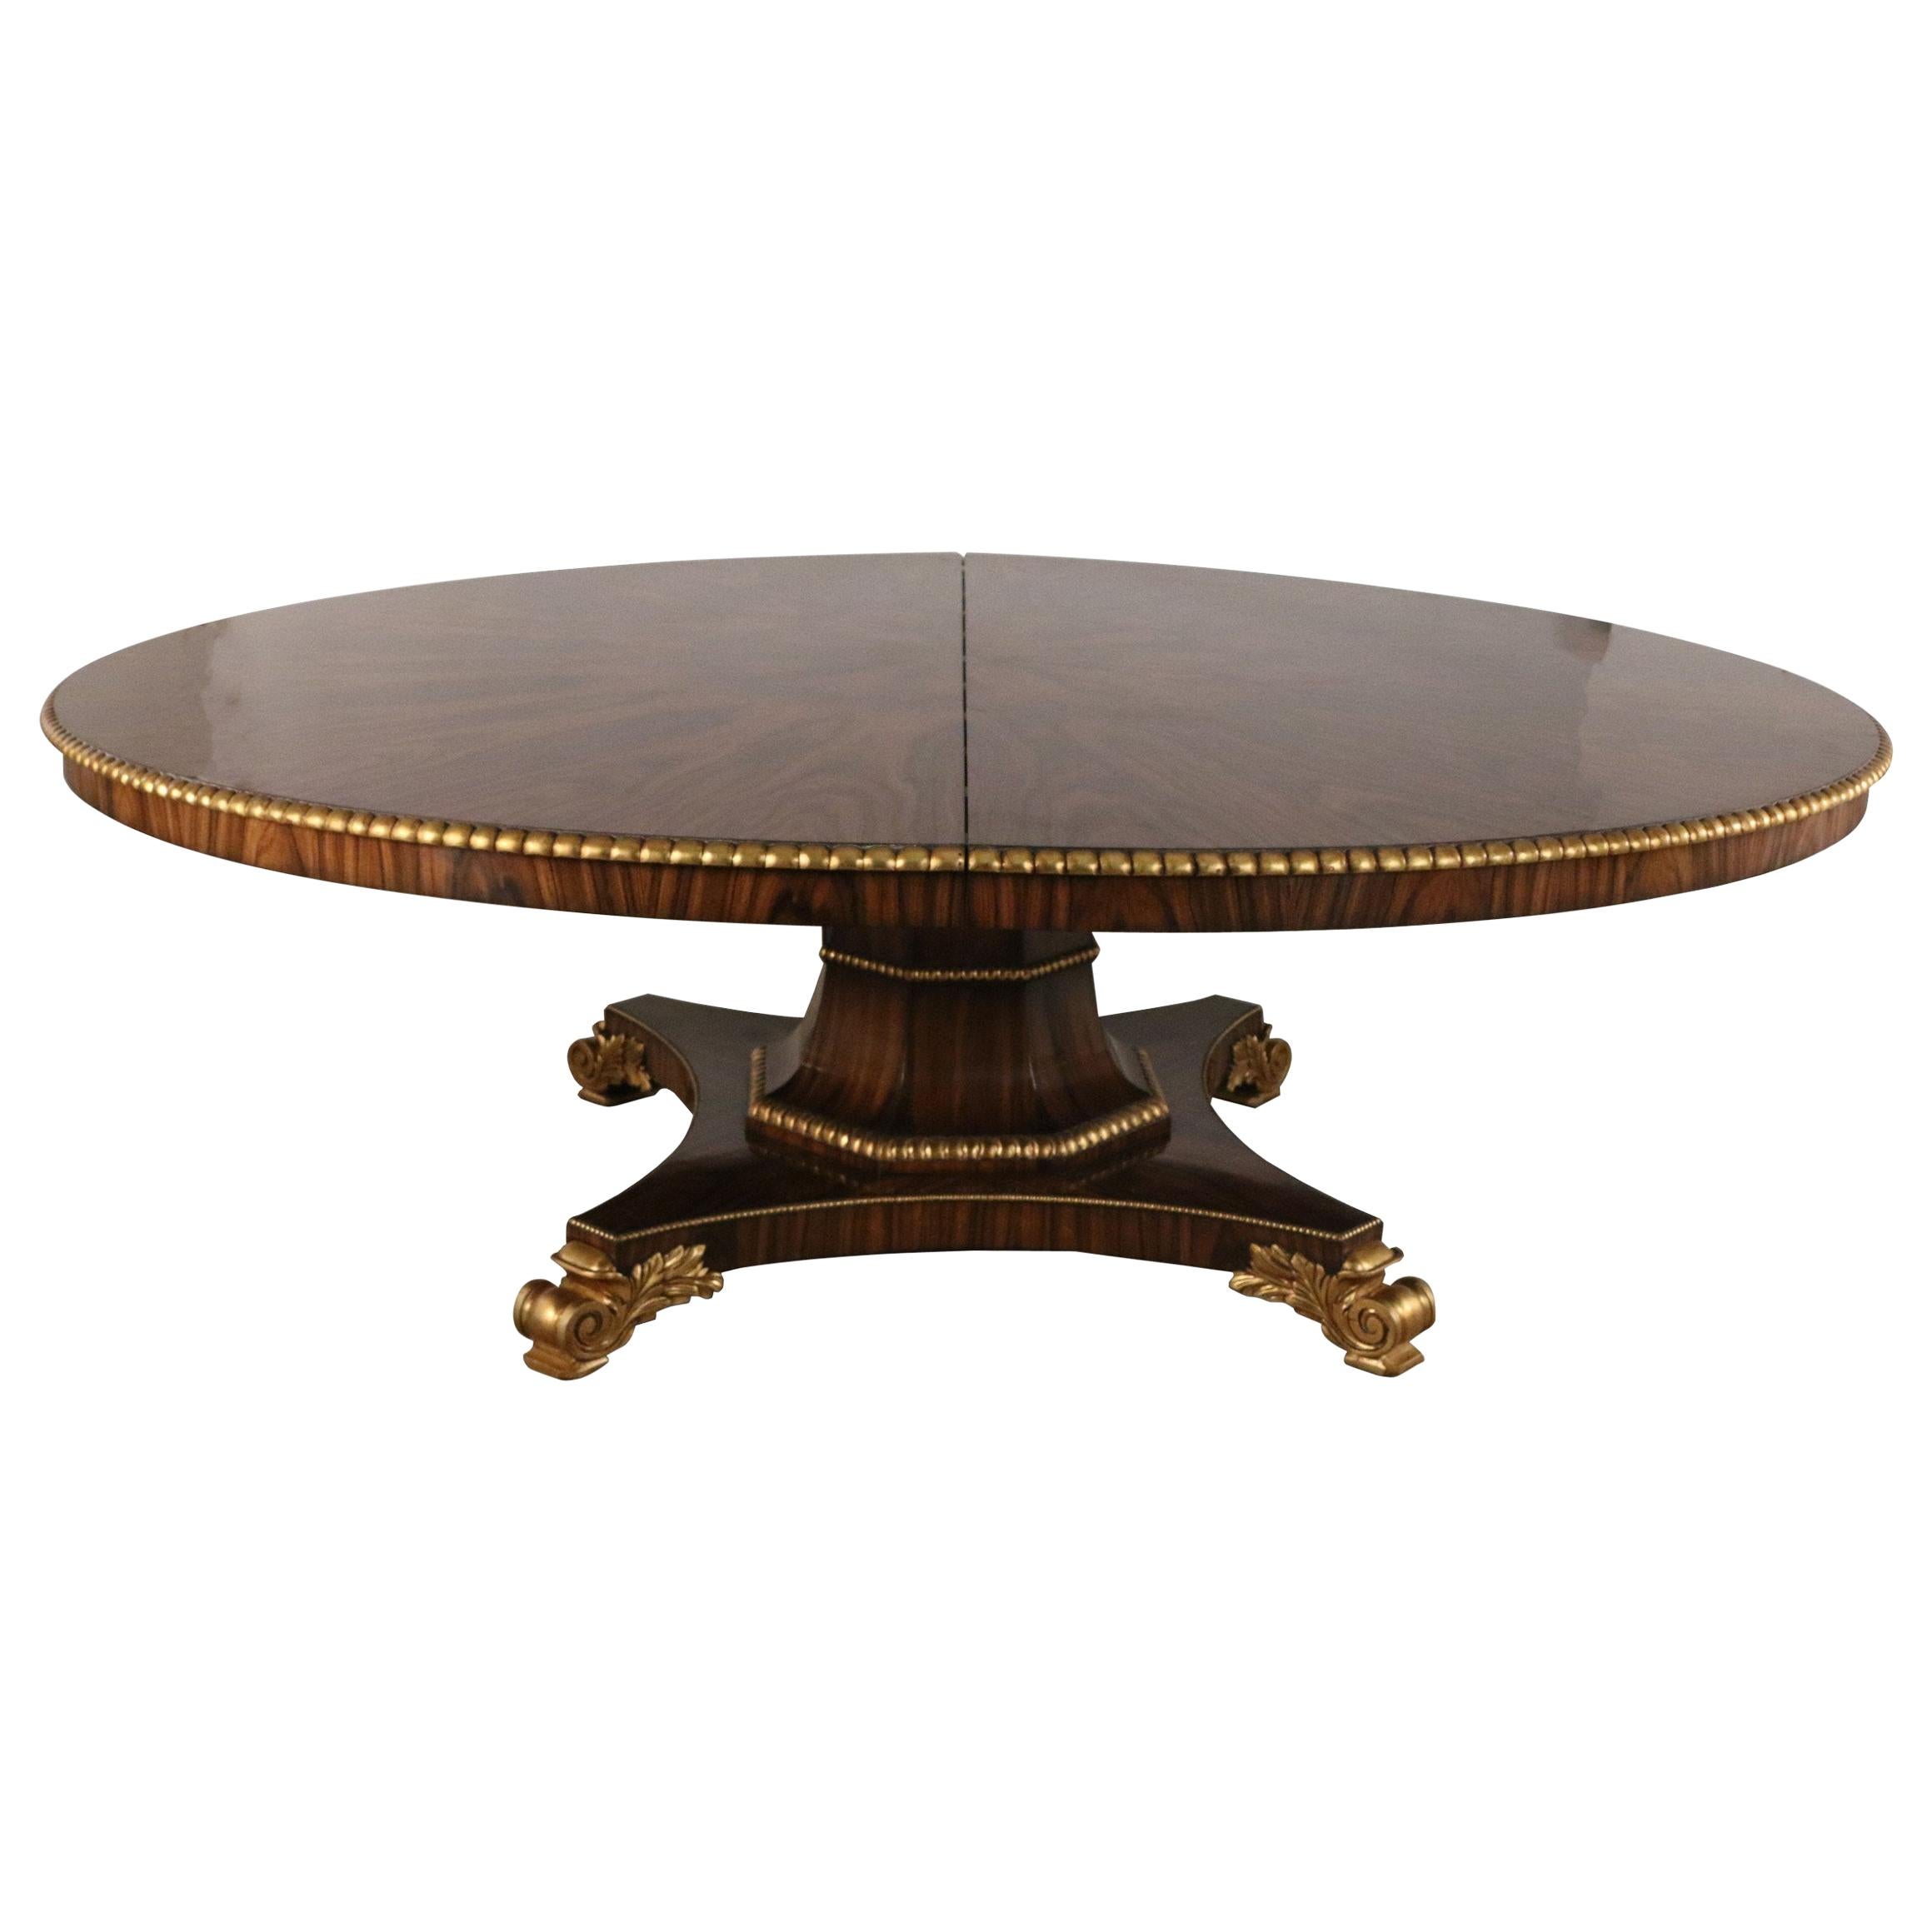 English Regency Style Mahogany and Giltwood Round Center Table